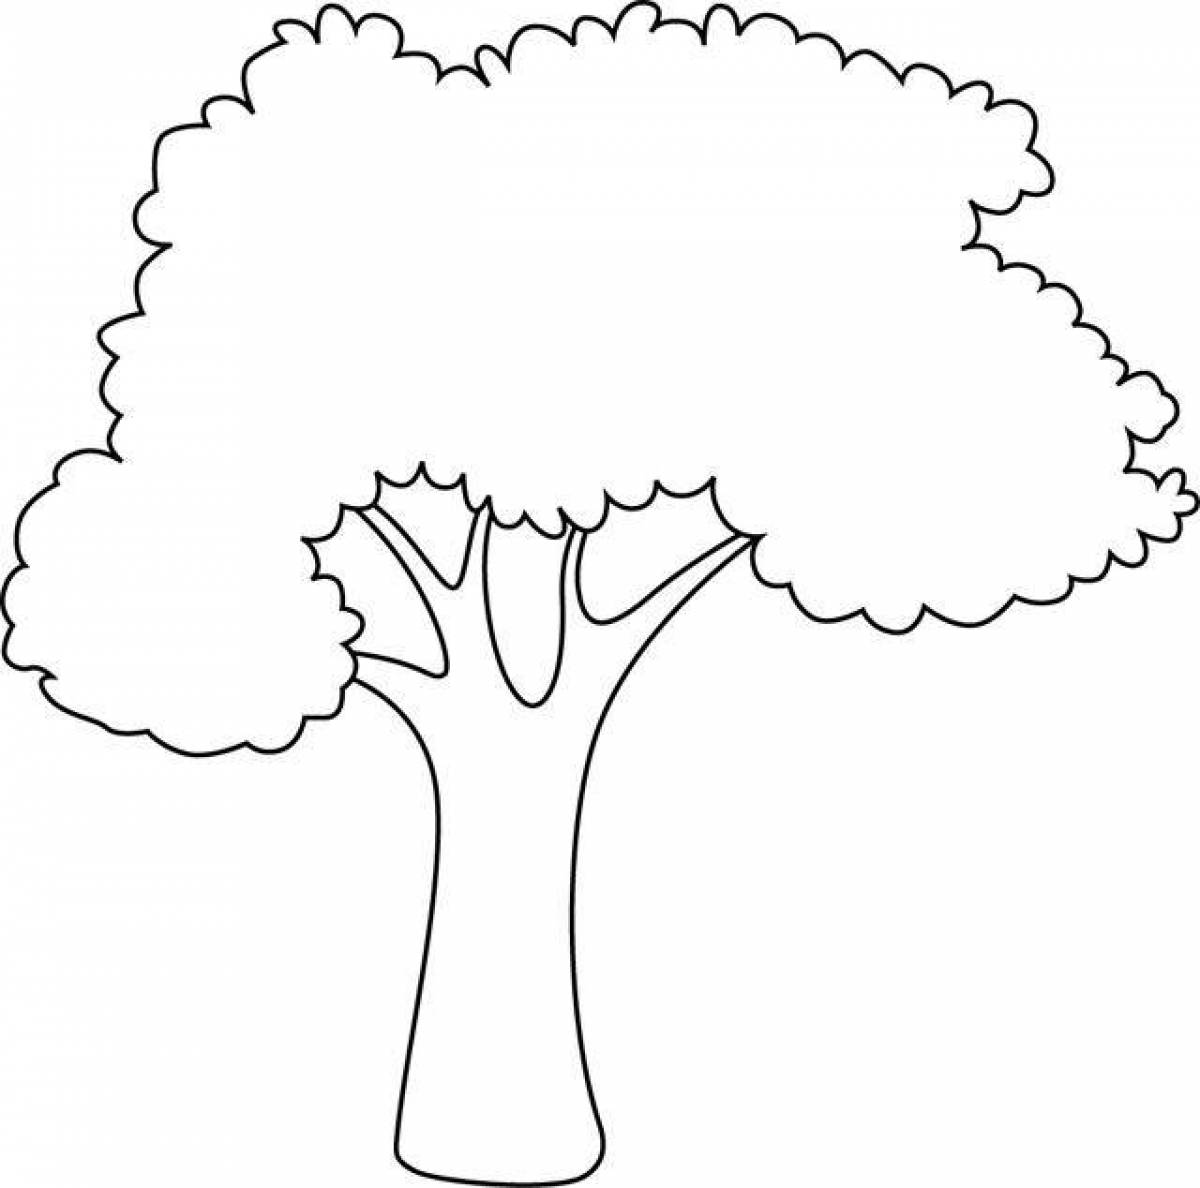 Tree template #2